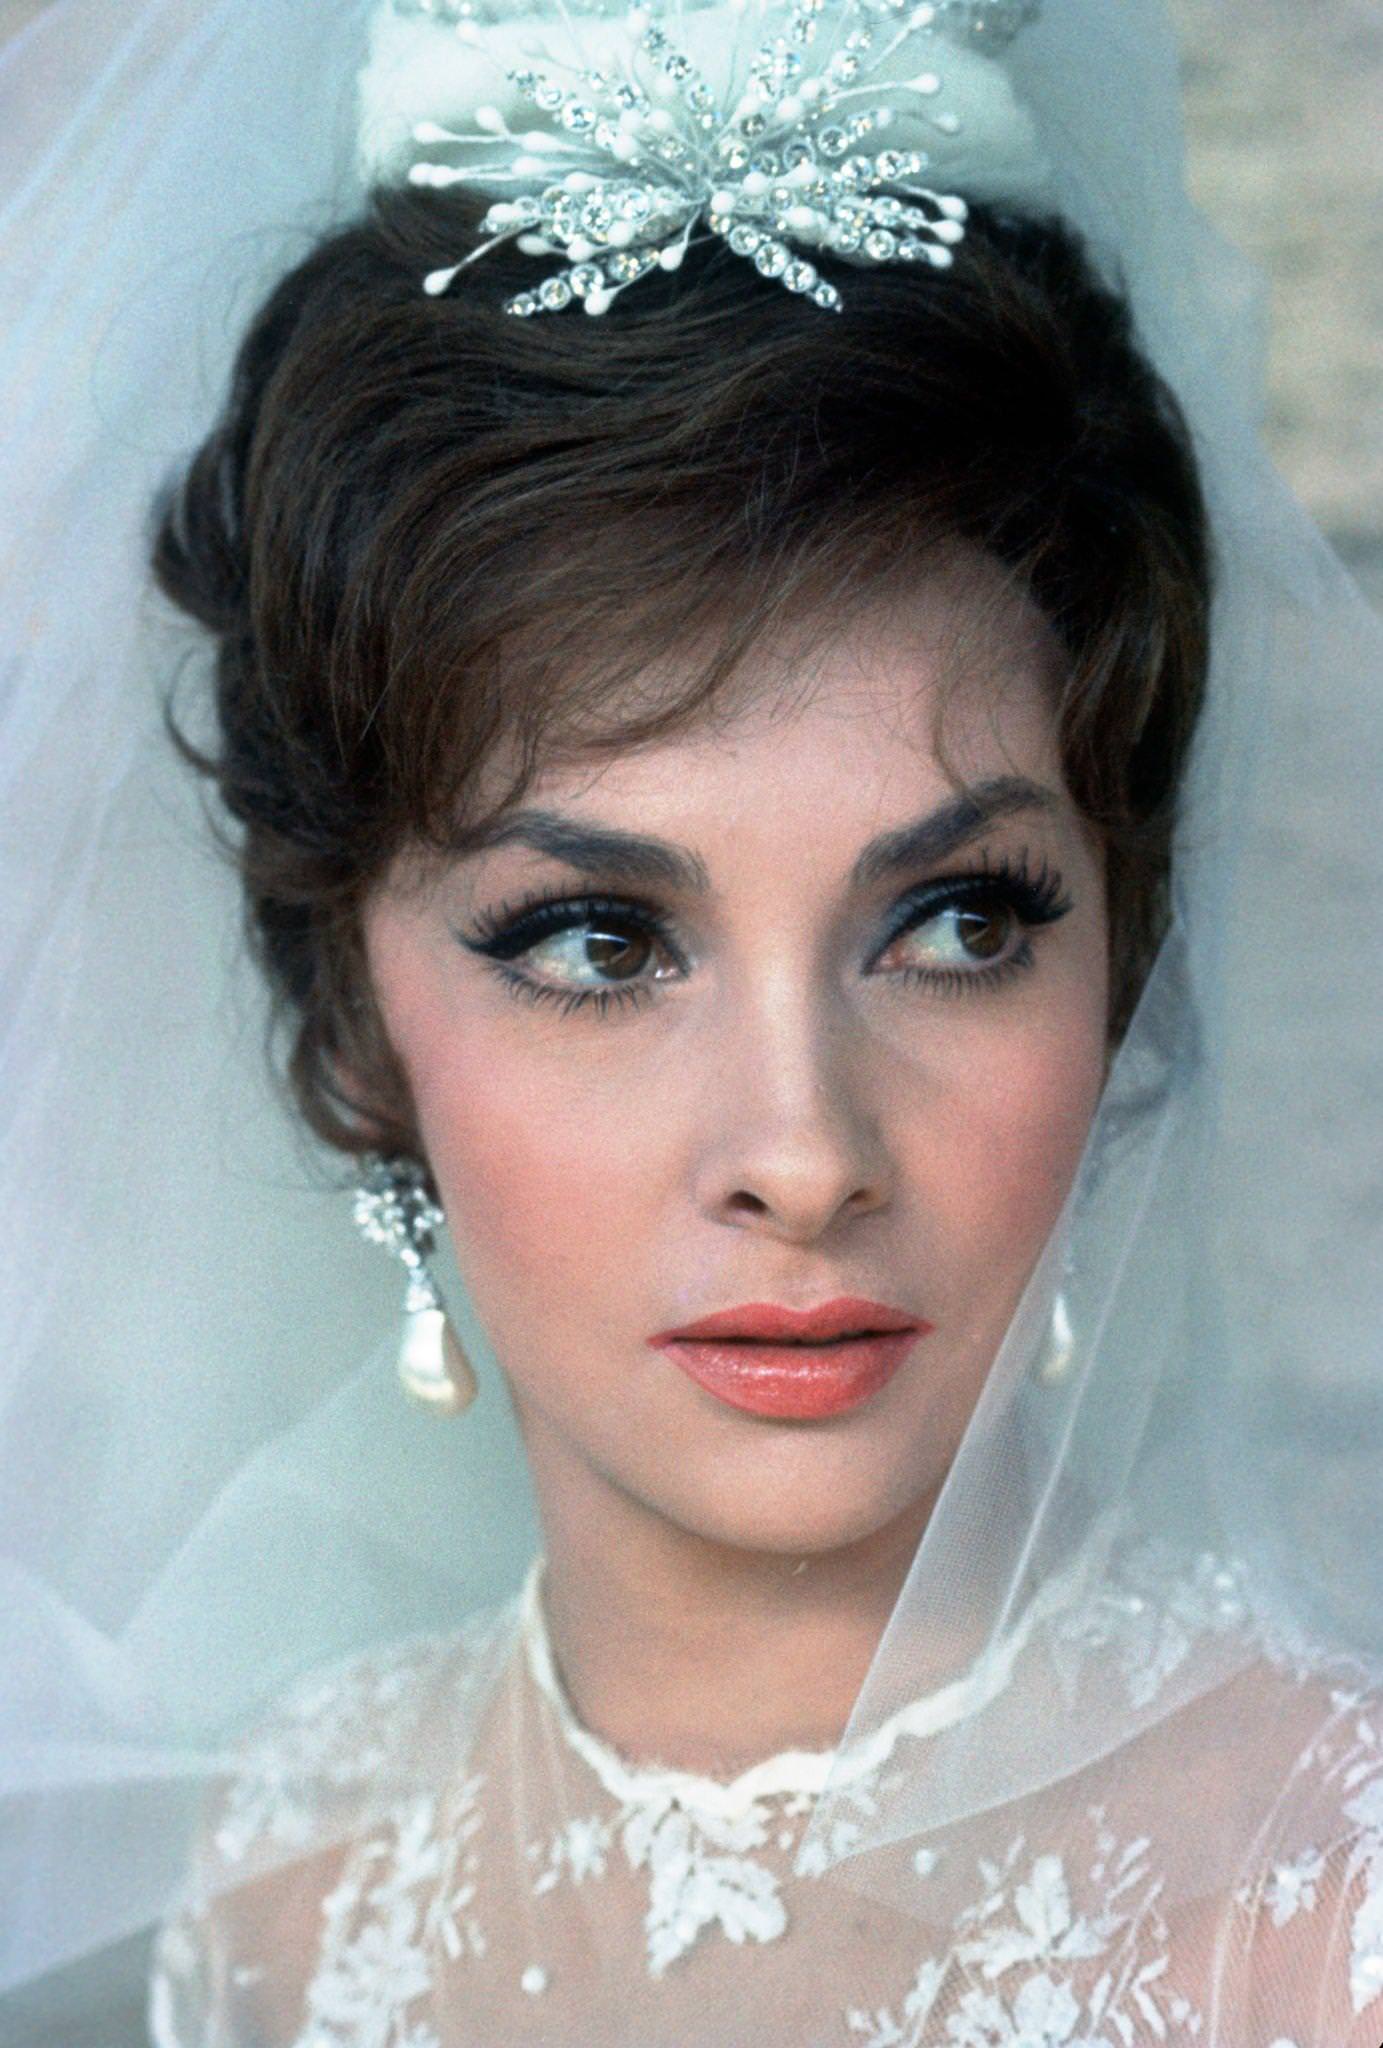 Gina Lollobrigida as a bride for "Come September" in Rome, Italy, 1960.